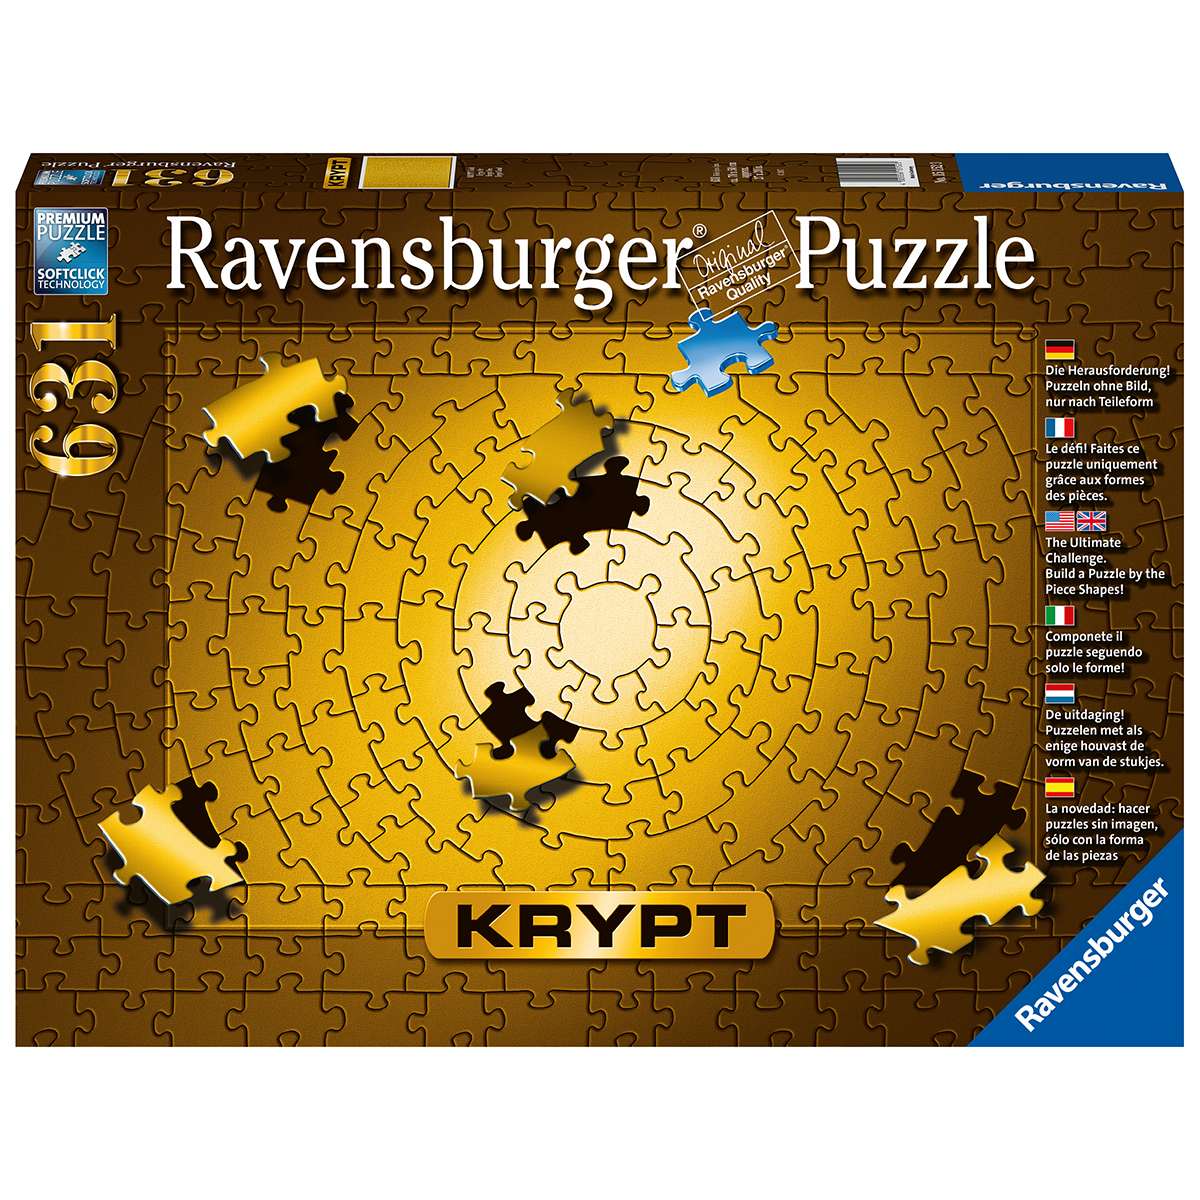 Ravensburger puzzle per adulti - 631 pezzi - krypt gold - oro - dimensione puzzle: 70x50 cm - RAVENSBURGER